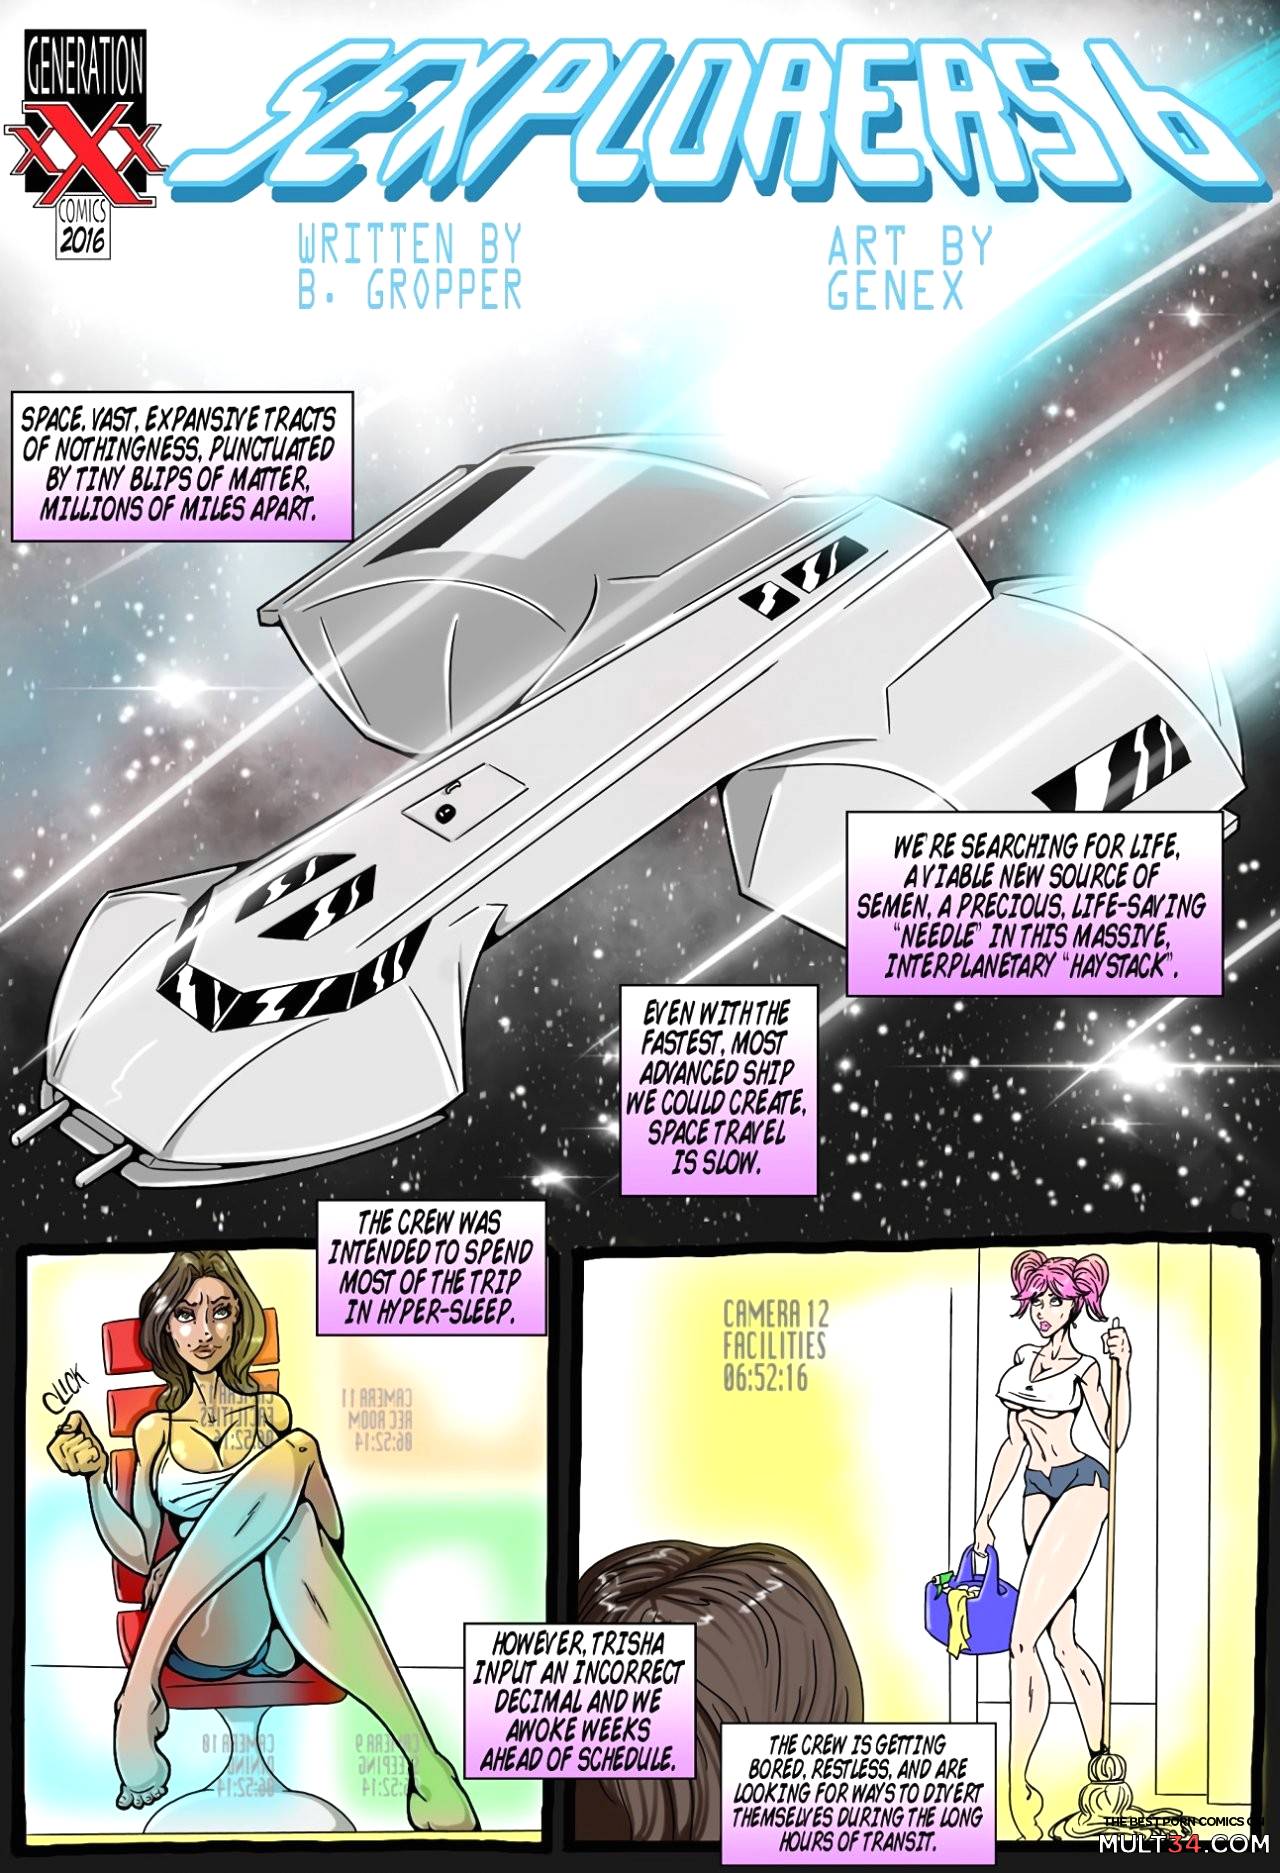 Sexplorers 6 Episode 2 page 1